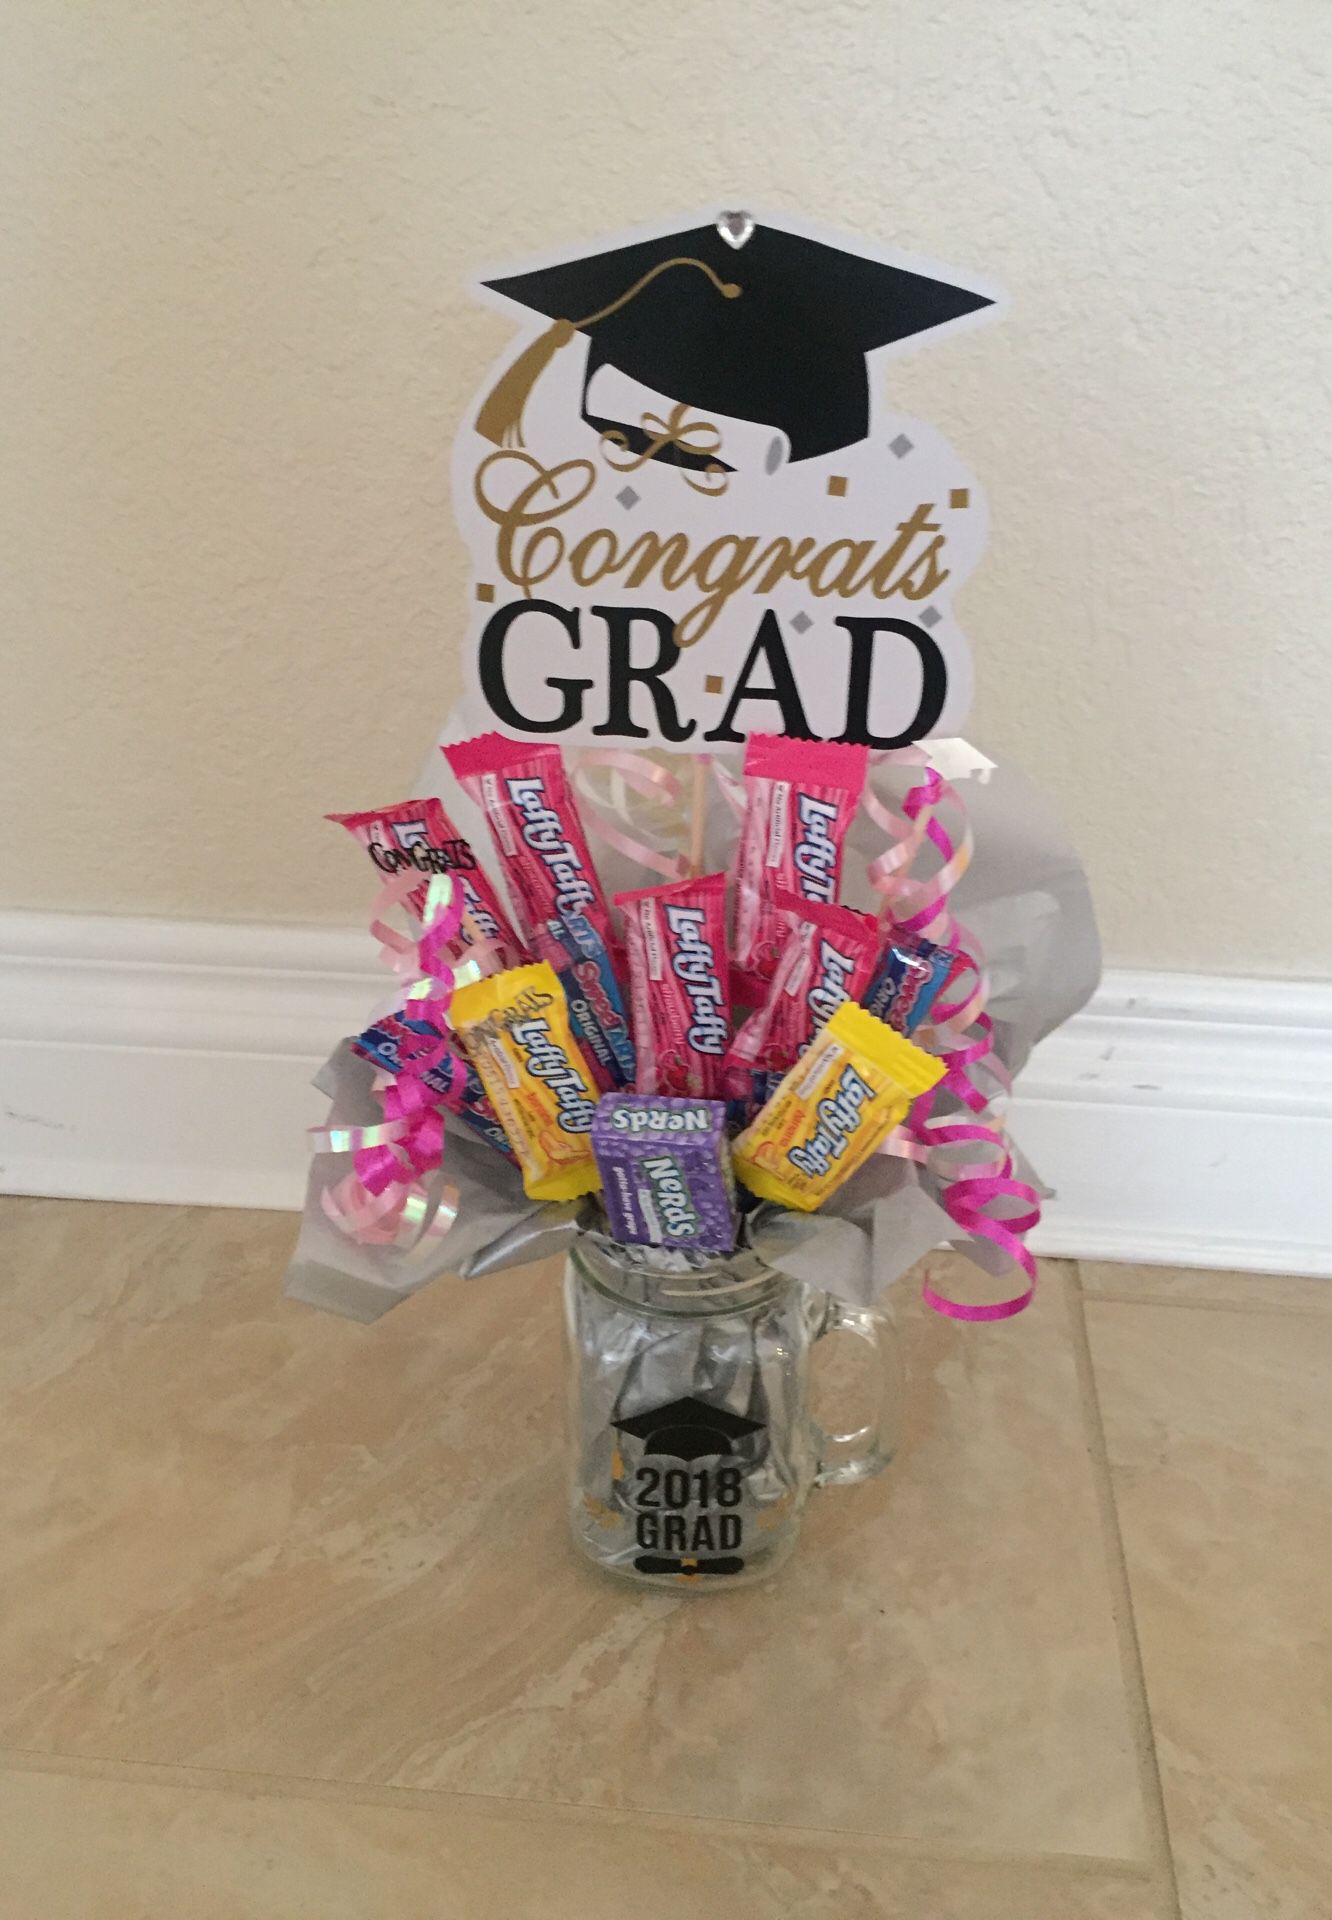 My daughters graduation bouquet 🥰 #graduationbouquet #girlboquet